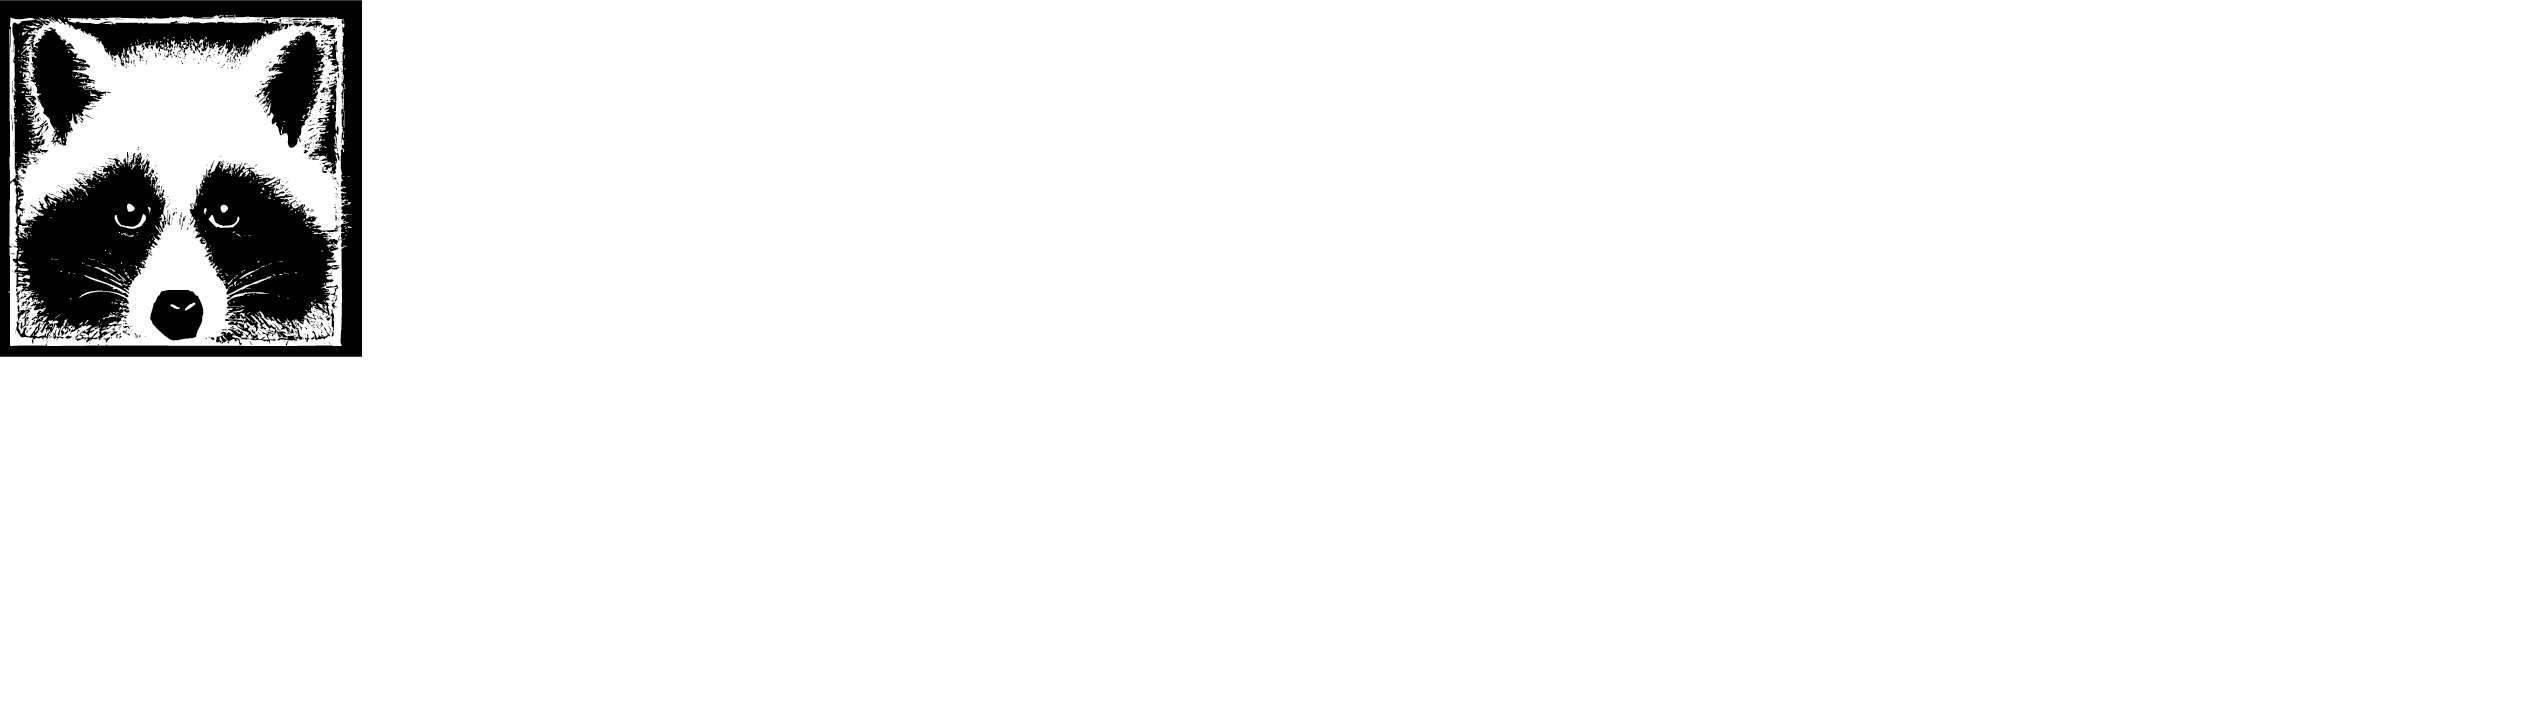 MerleFest logo